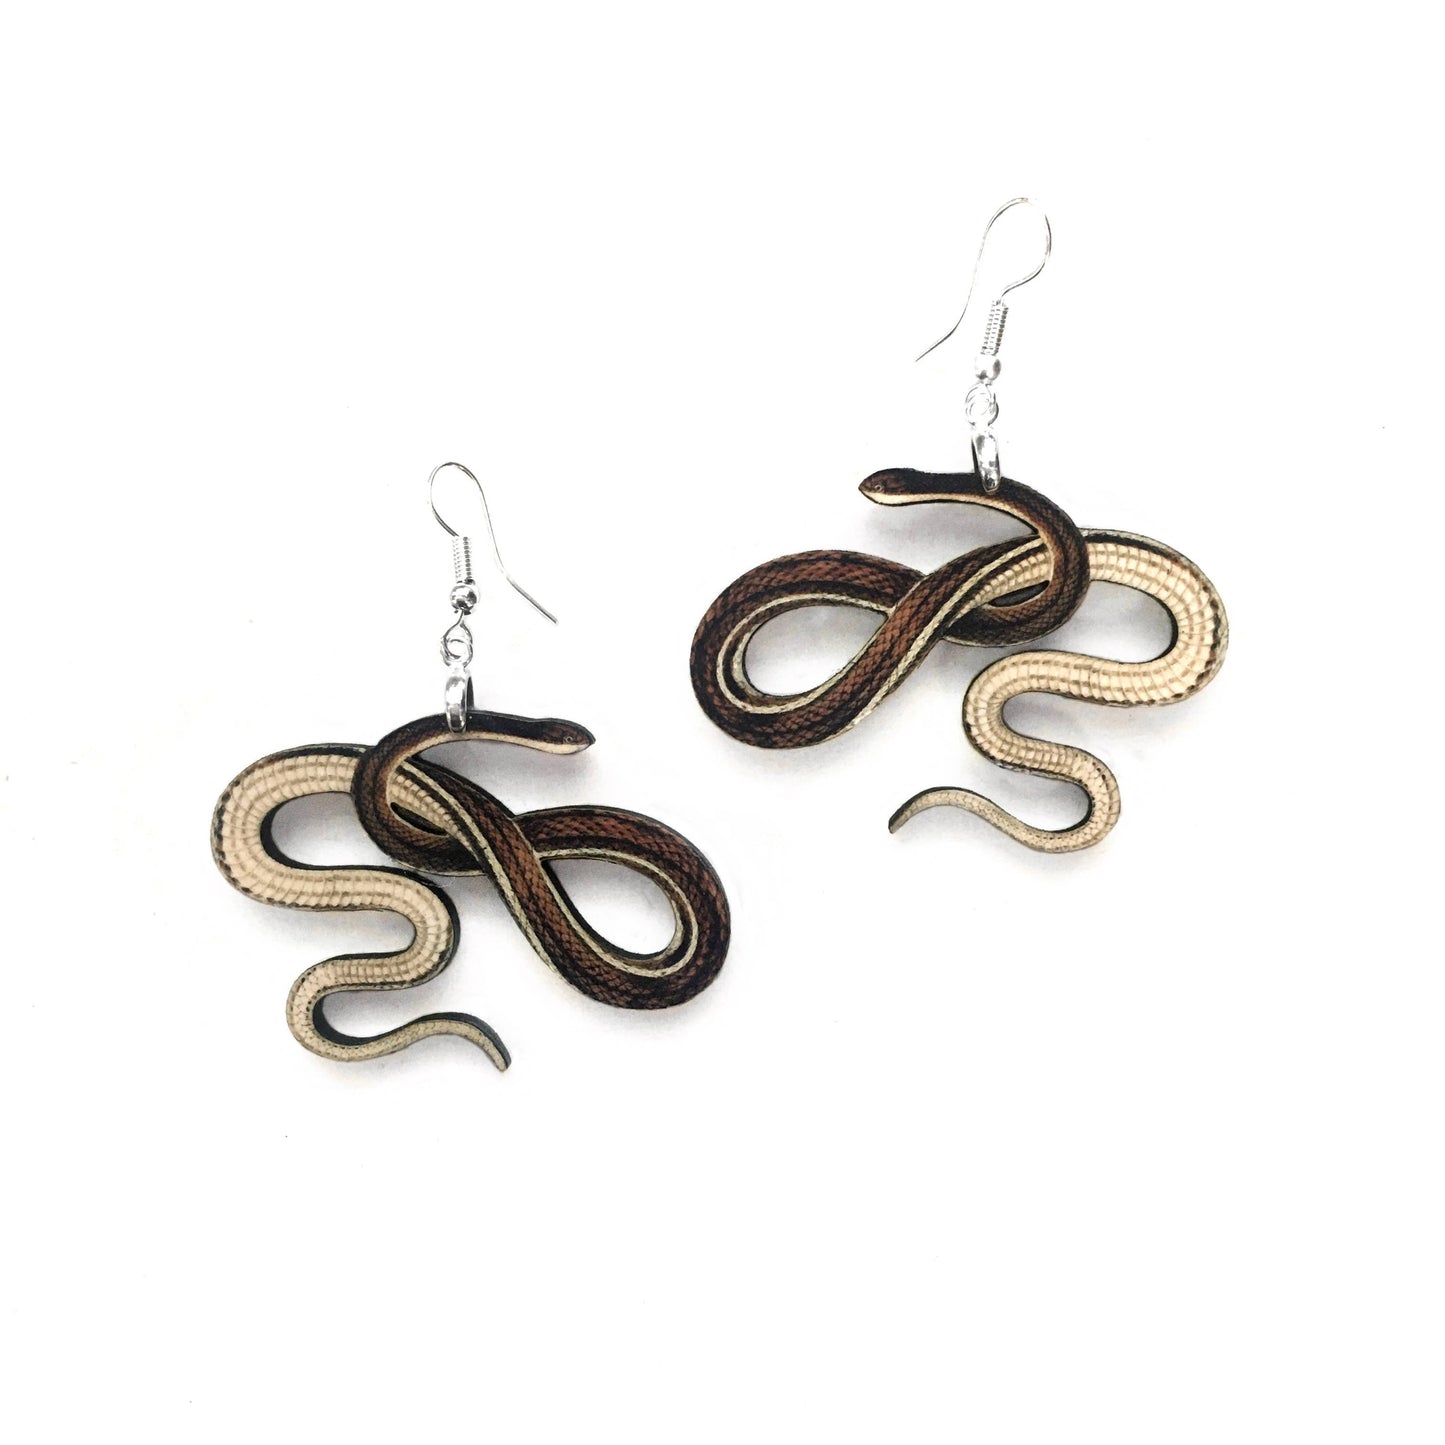 Garter Snake Earrings - Antique Image - Laser Cut Wood